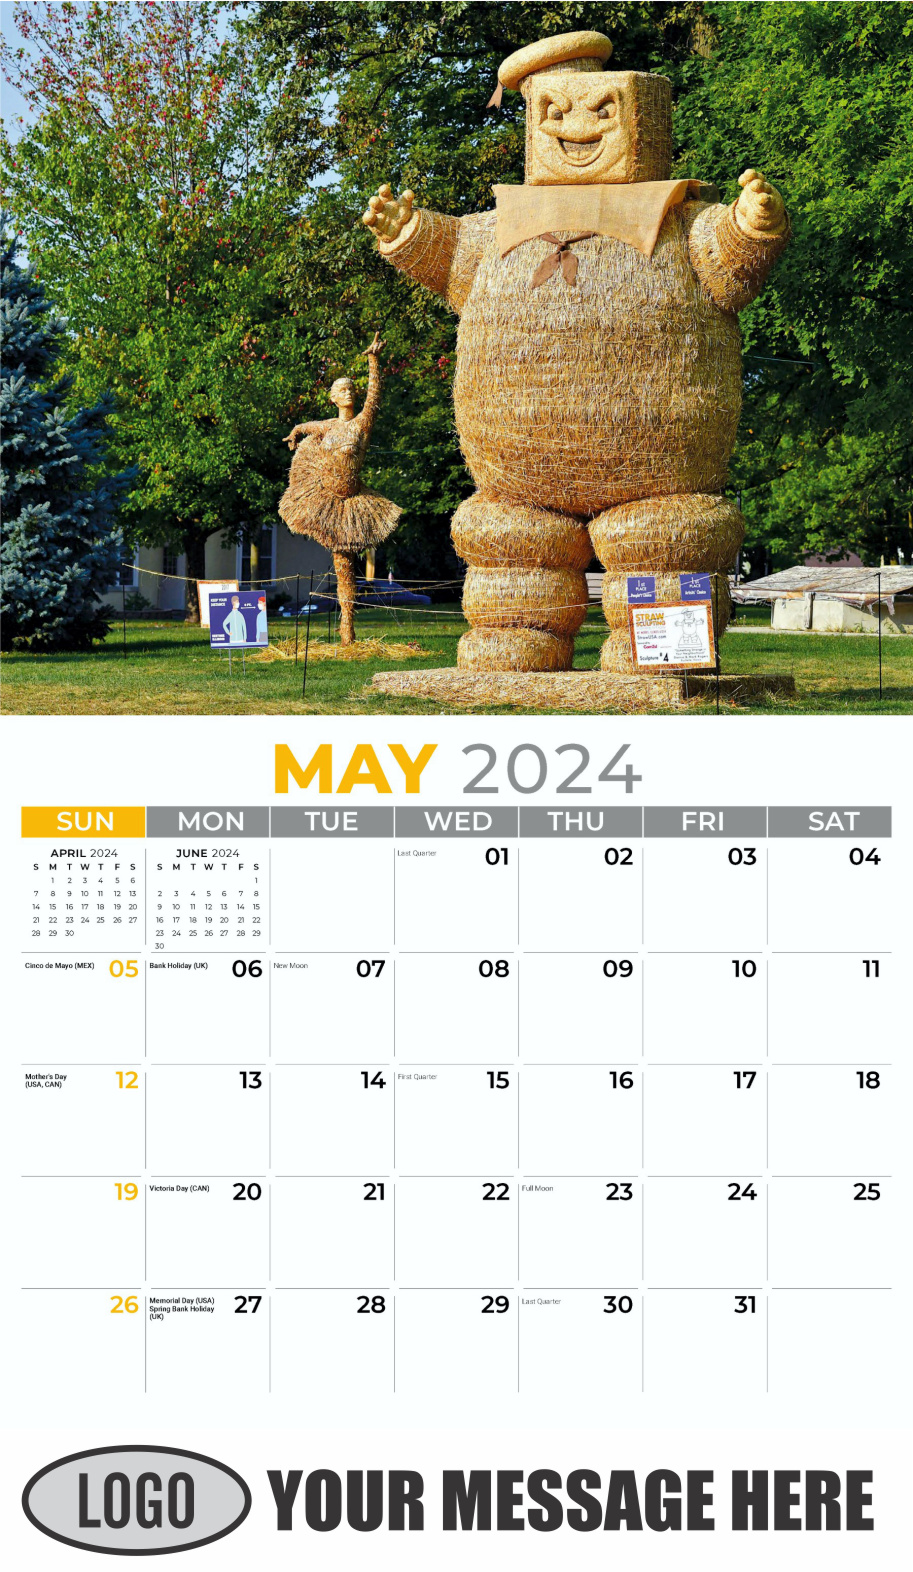 Country Spirit 2024 Business Advertising Calendar - May